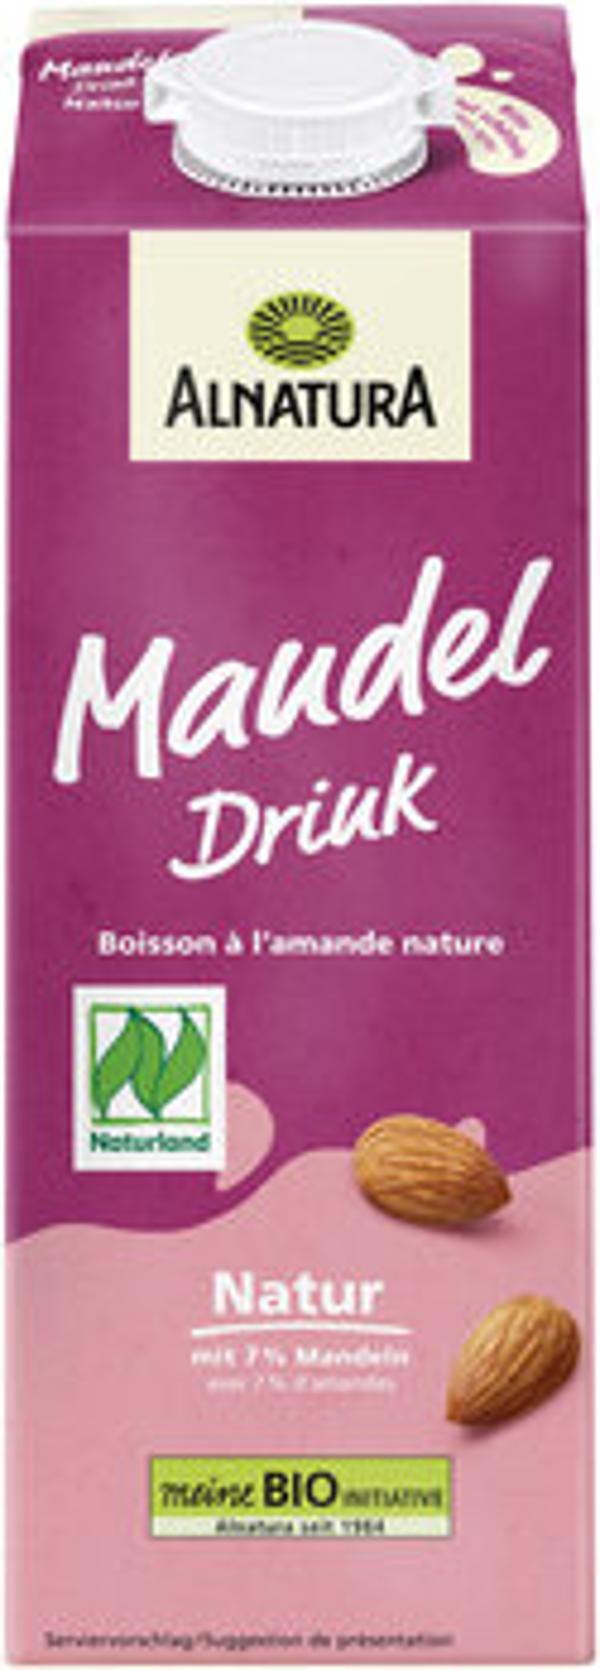 Produktfoto zu Alnatura Mandel Drink Natur 1L